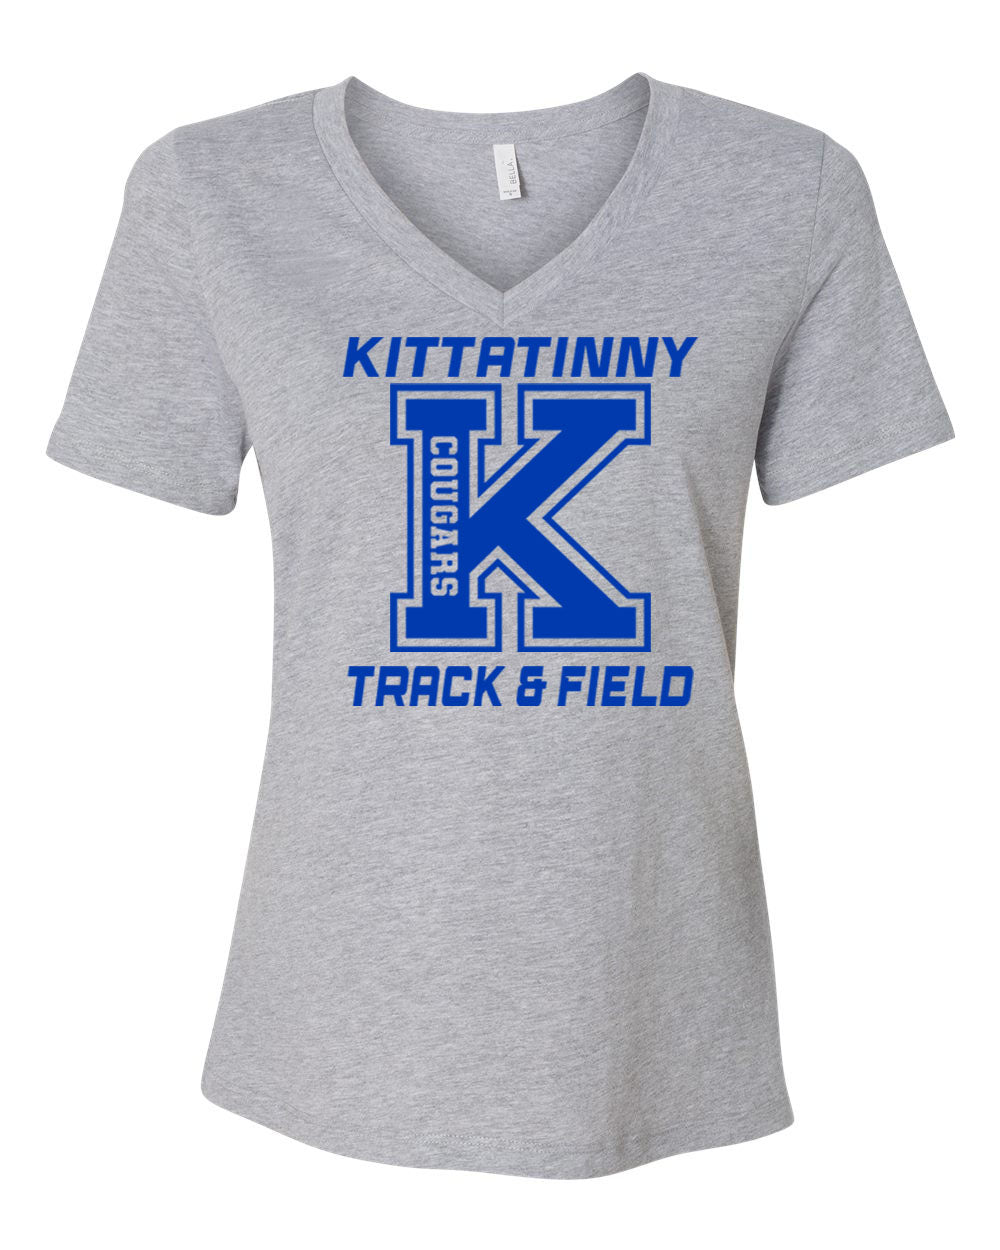 Kittatinny Track Design 3 V-neck T-Shirt